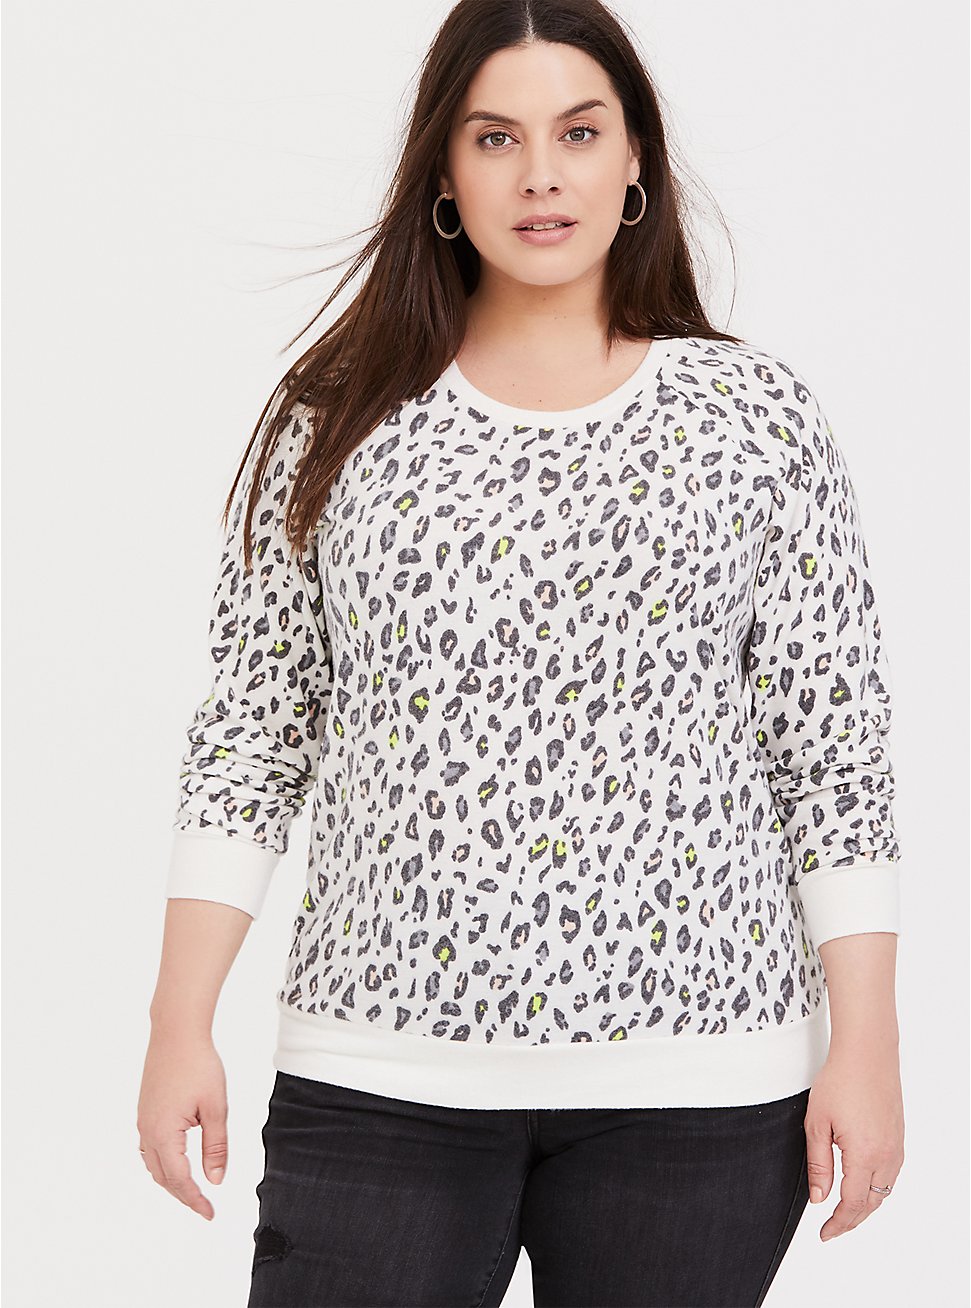 Super Soft Plush Neon Leopard Sweatshirt, LEOPARD-WHITE, hi-res